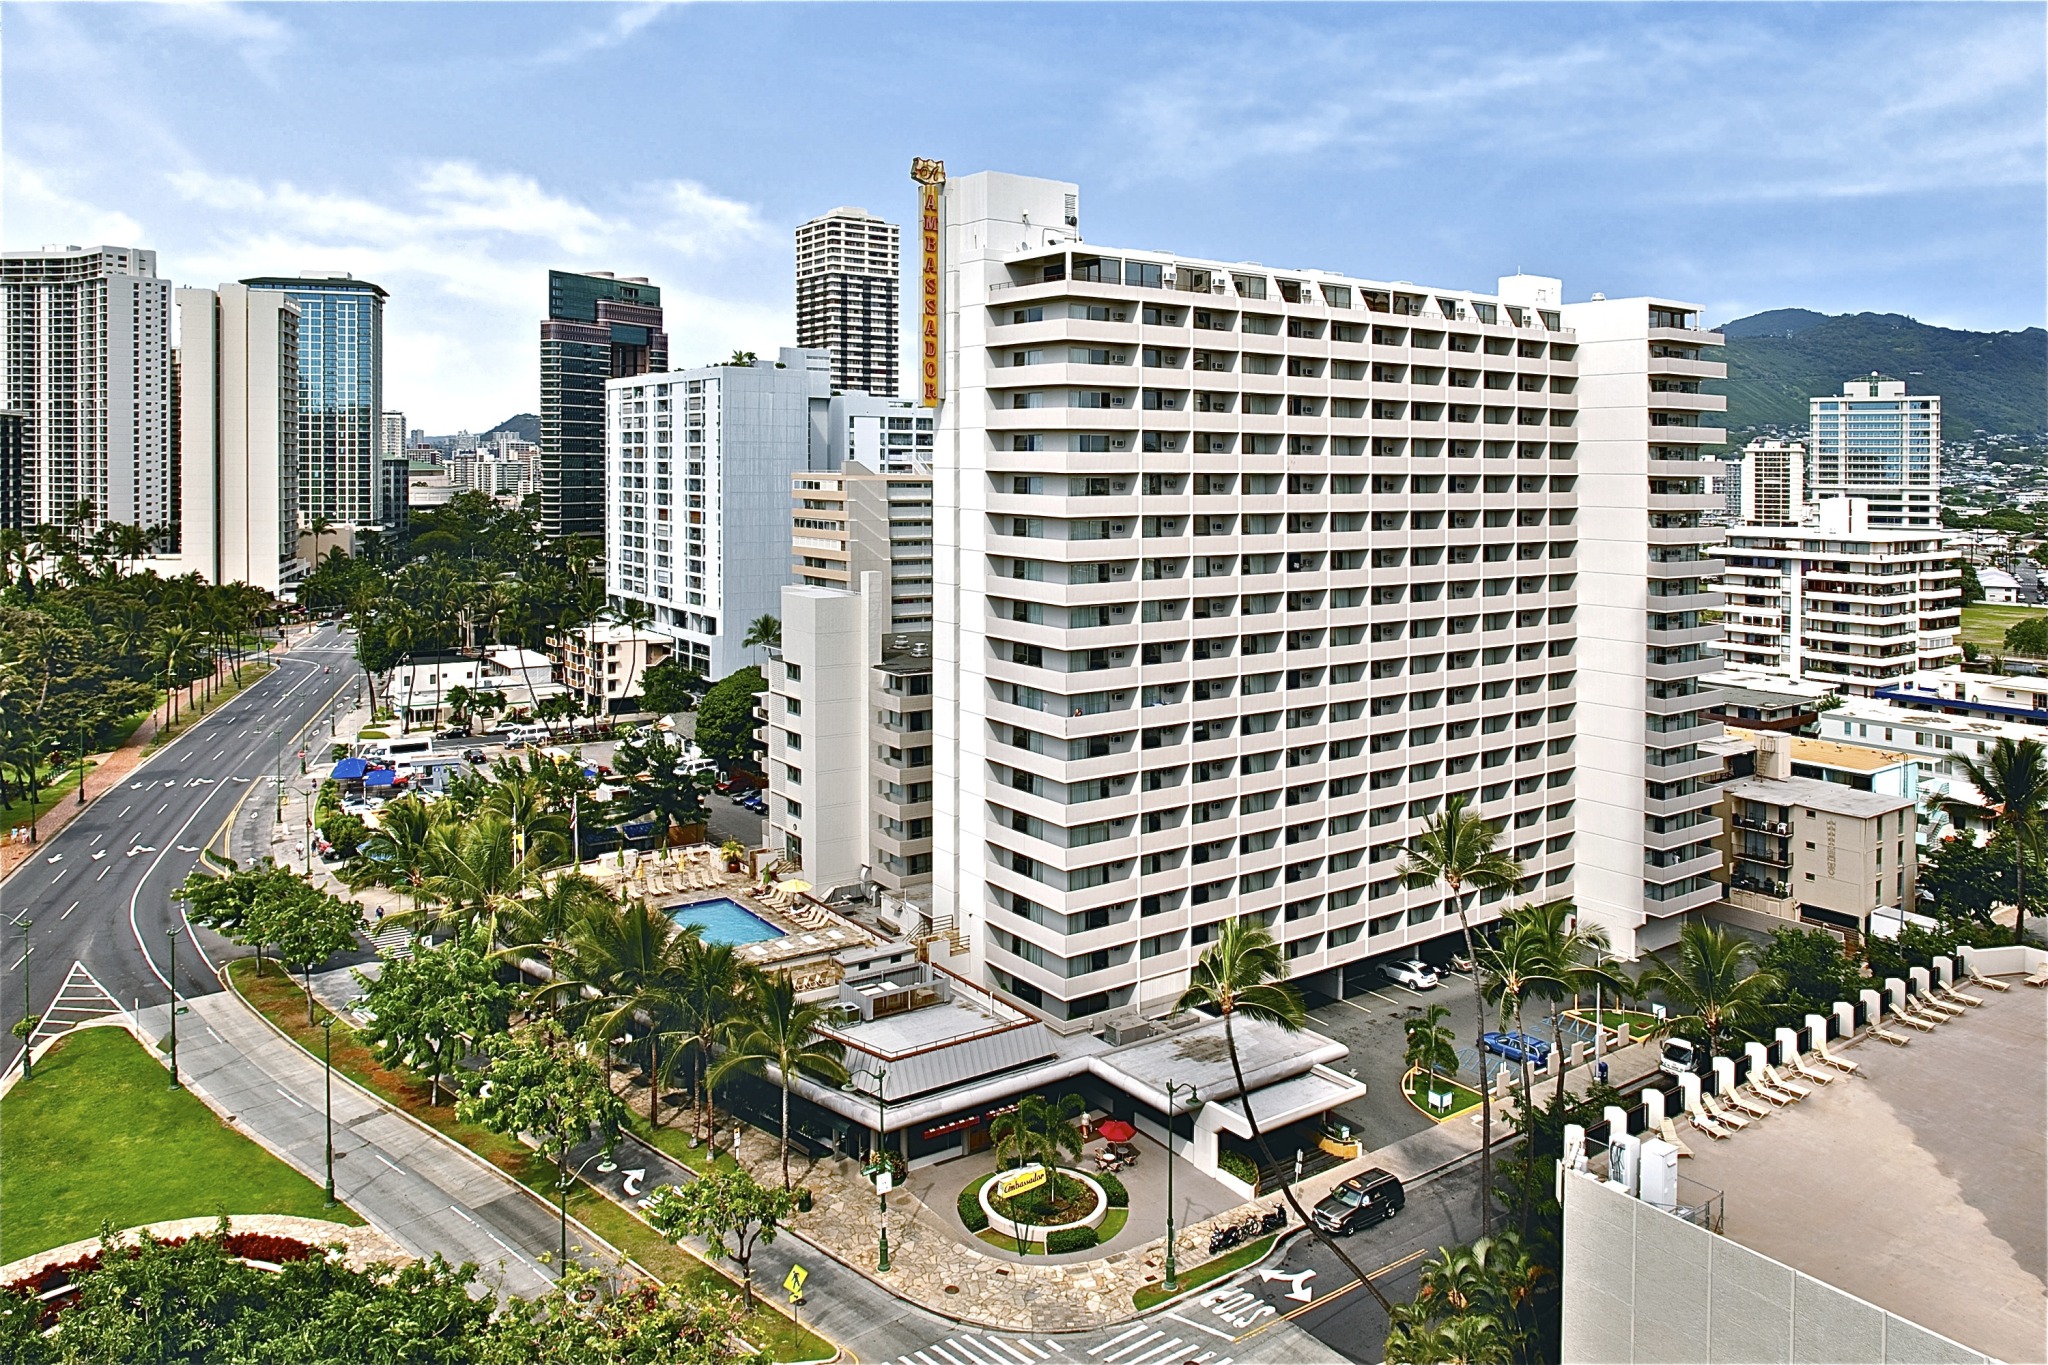 Ambassador Hotel Waikiki is an ideally-located Honolulu Hotel offering some of the best rates near Waikiki Beach.